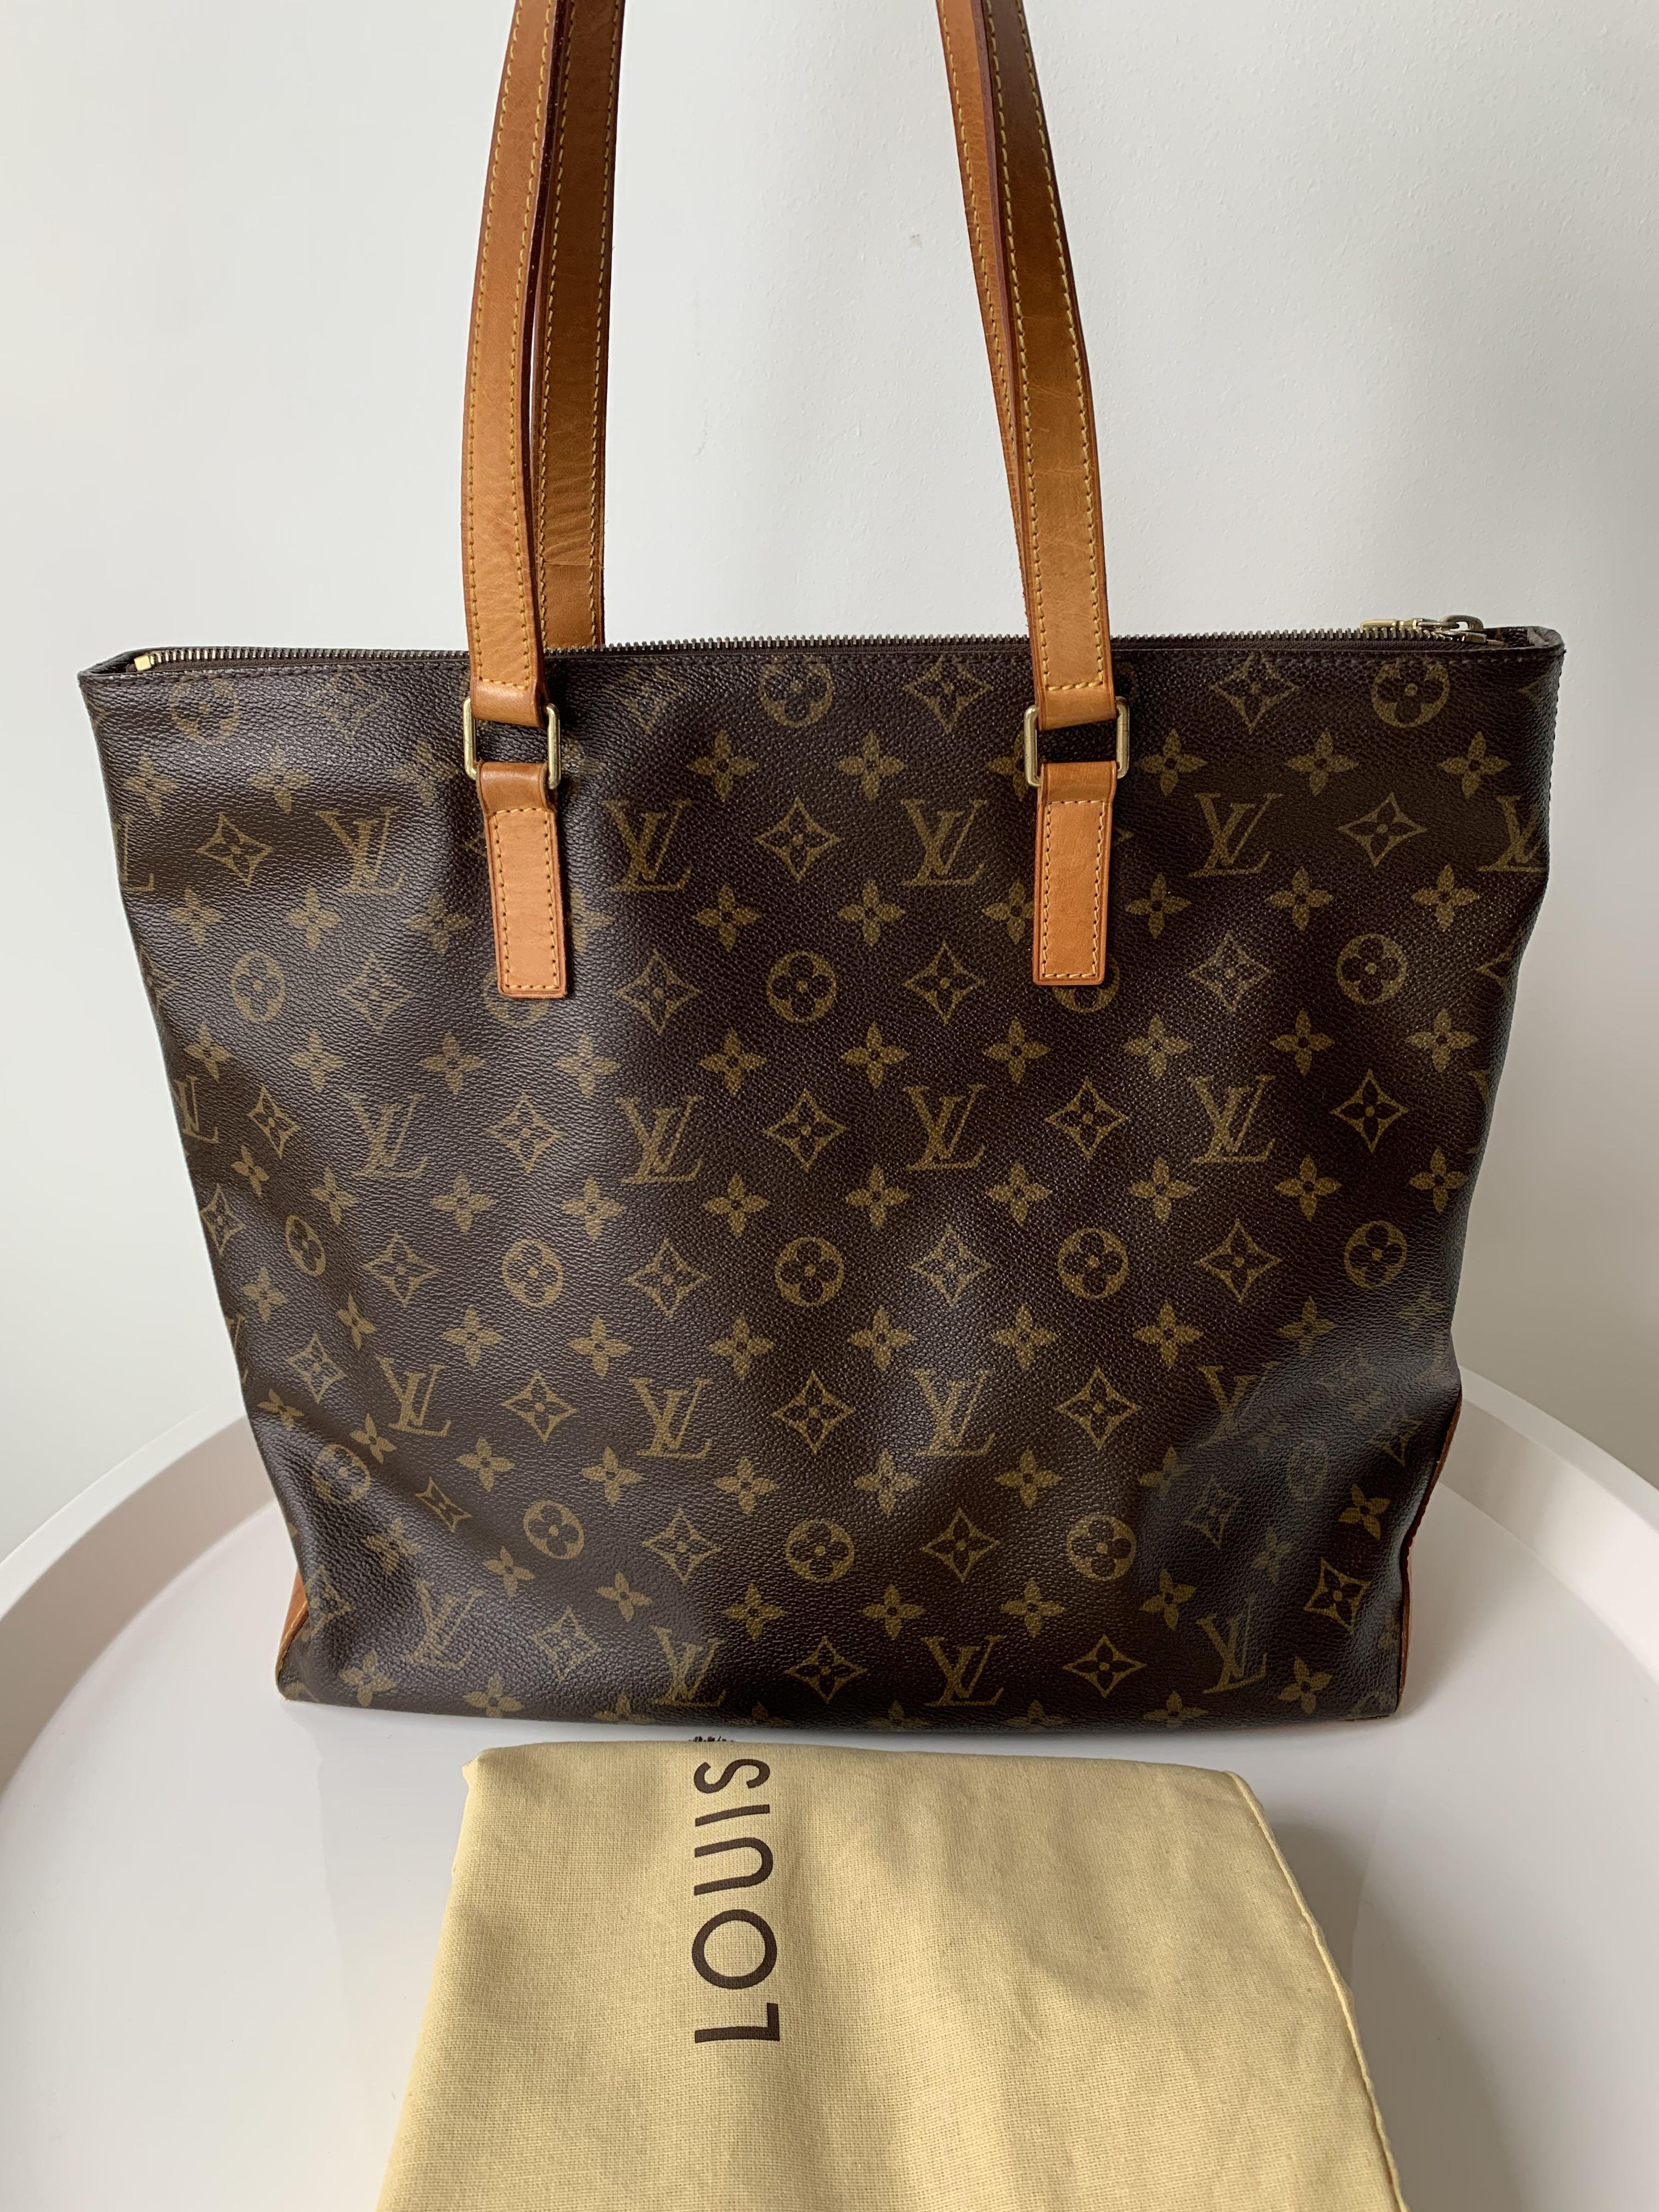 Preowned Louis Vuitton Cabas Mezzo Tote Bag! $1,295 www